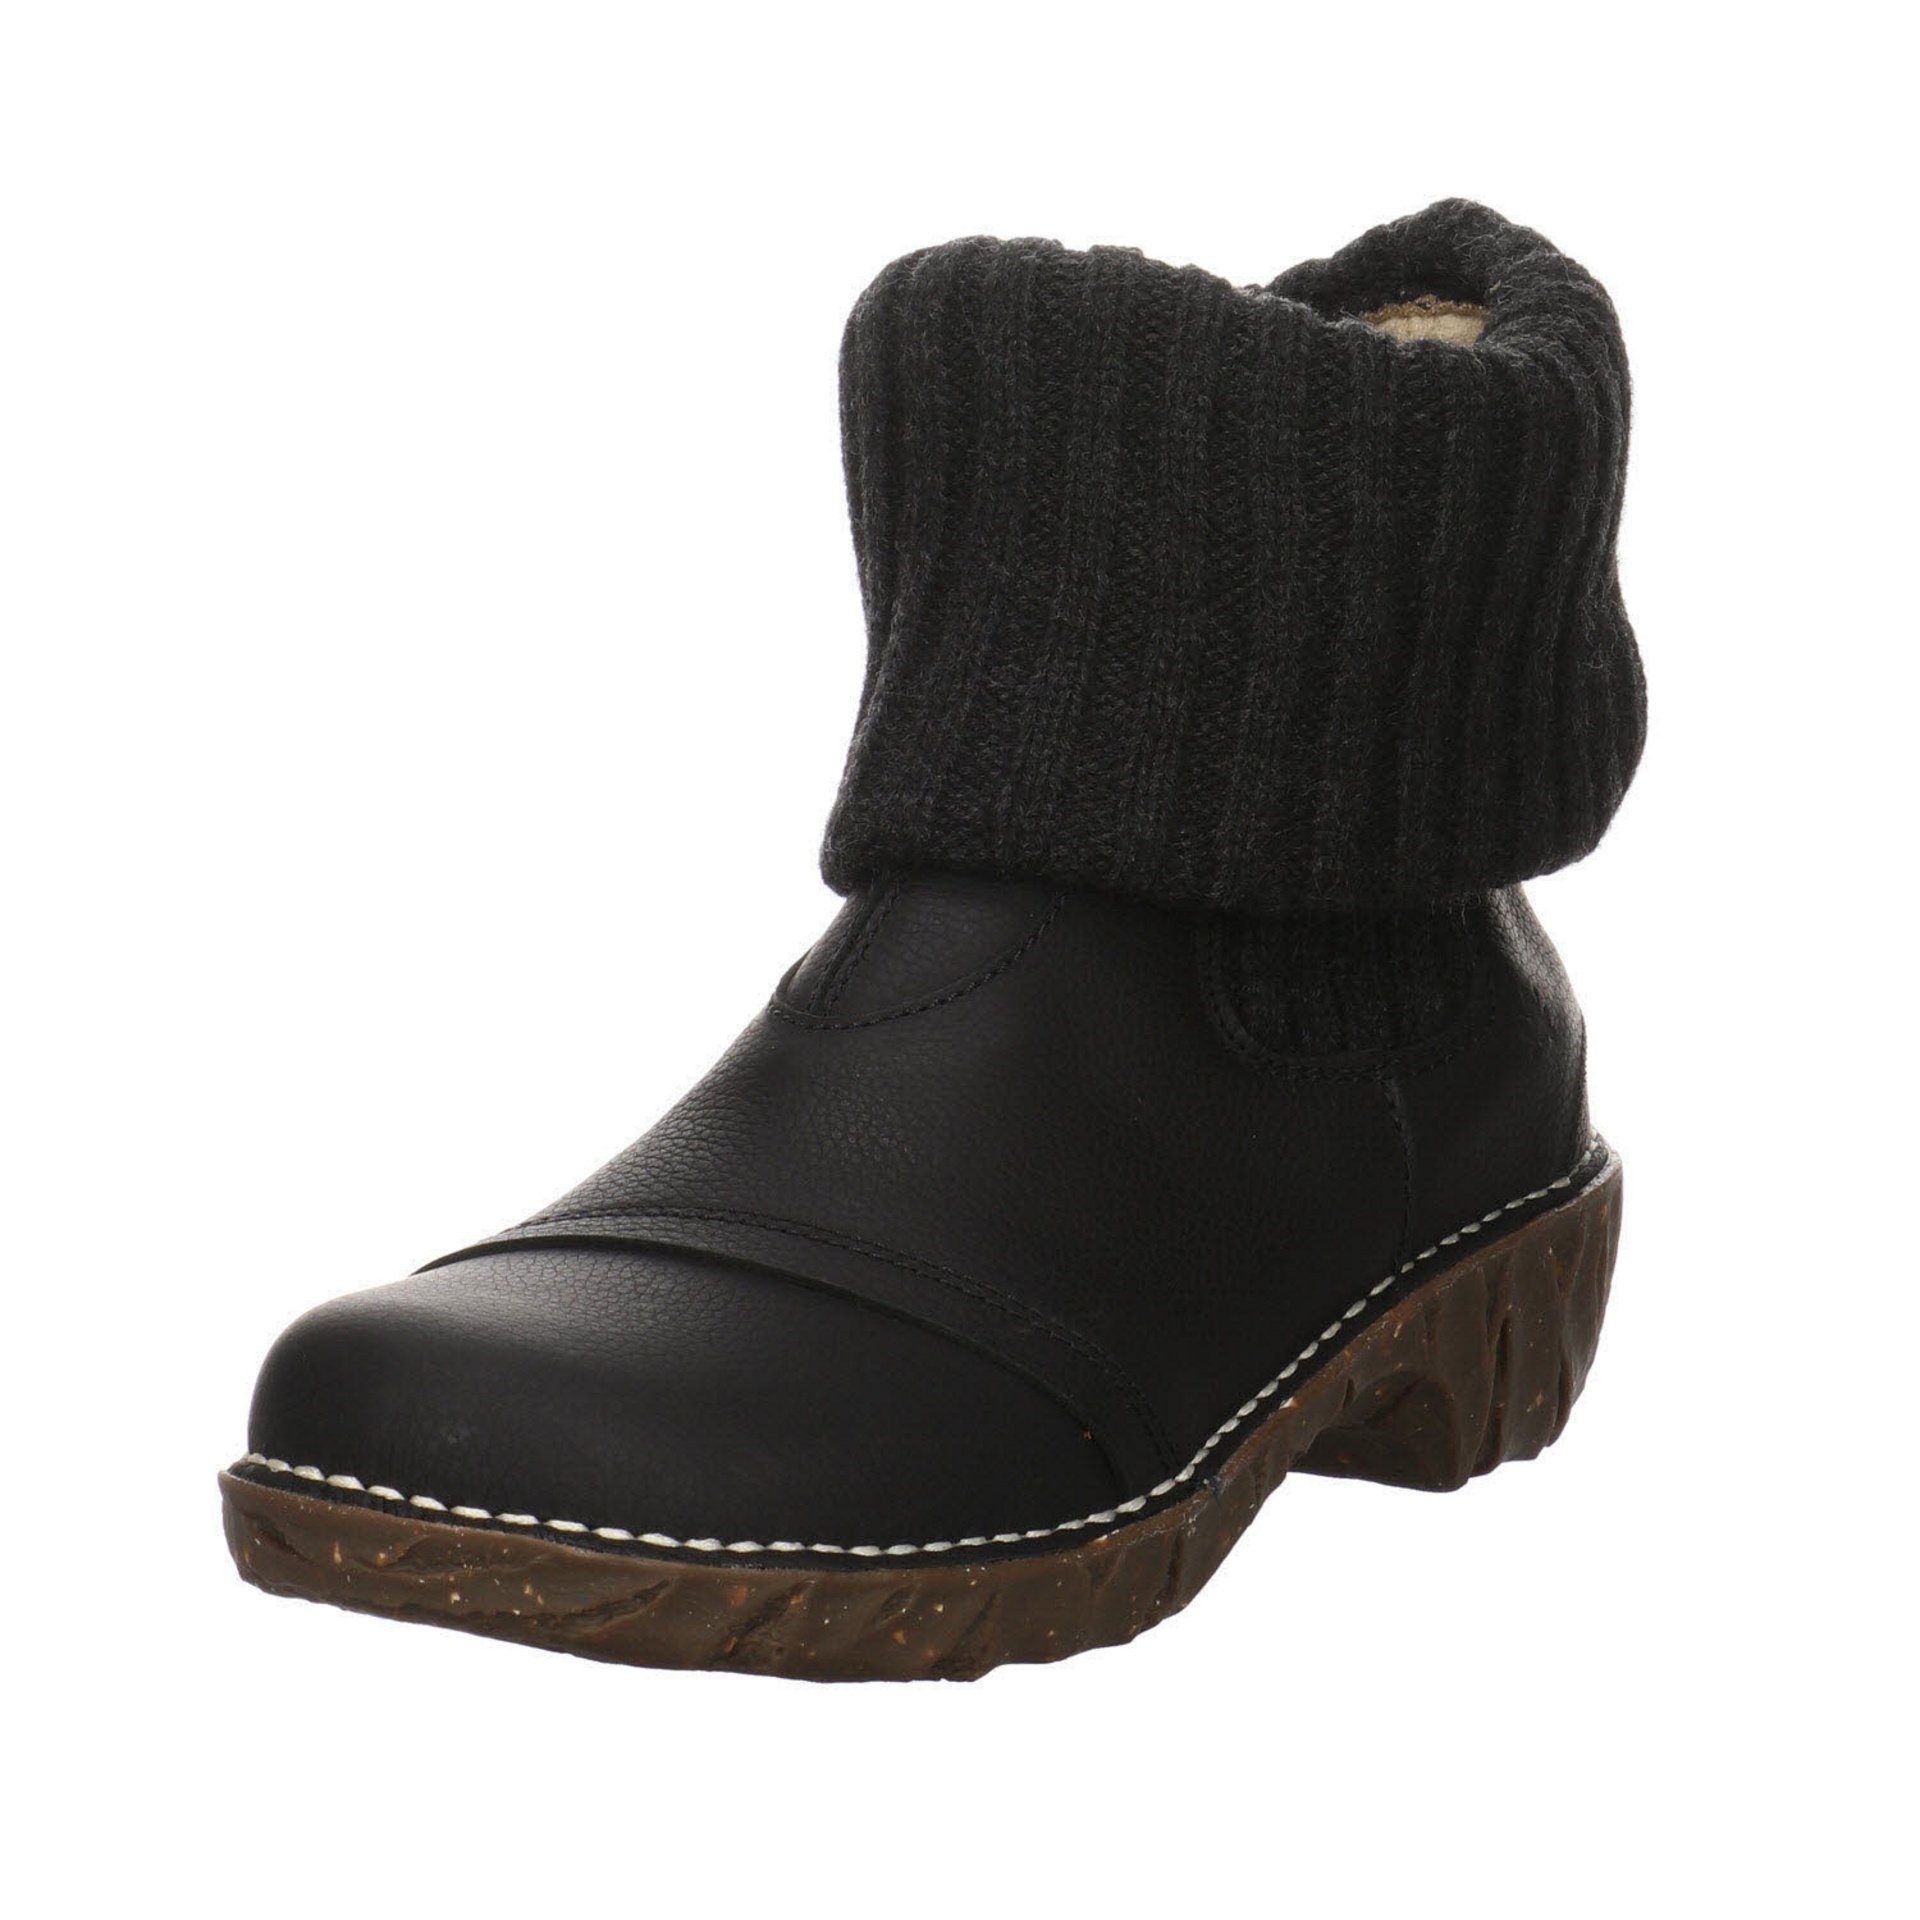 El Naturalista Damen Stiefel Schuhe Yggdrasil Boots Stiefel Glattleder black